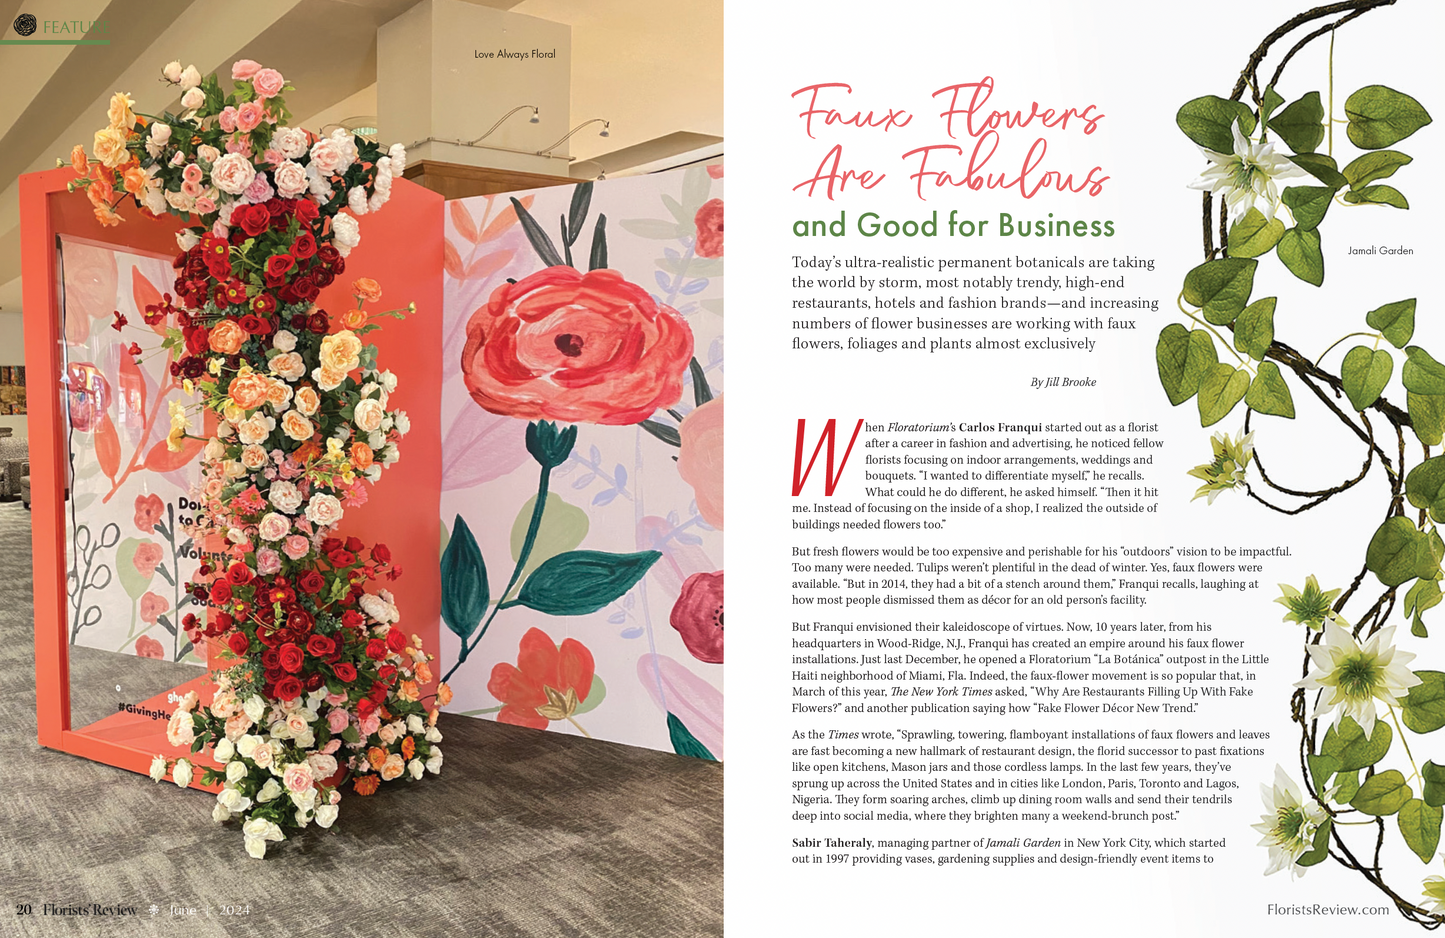 June 2024 - Florists' Review PRINT